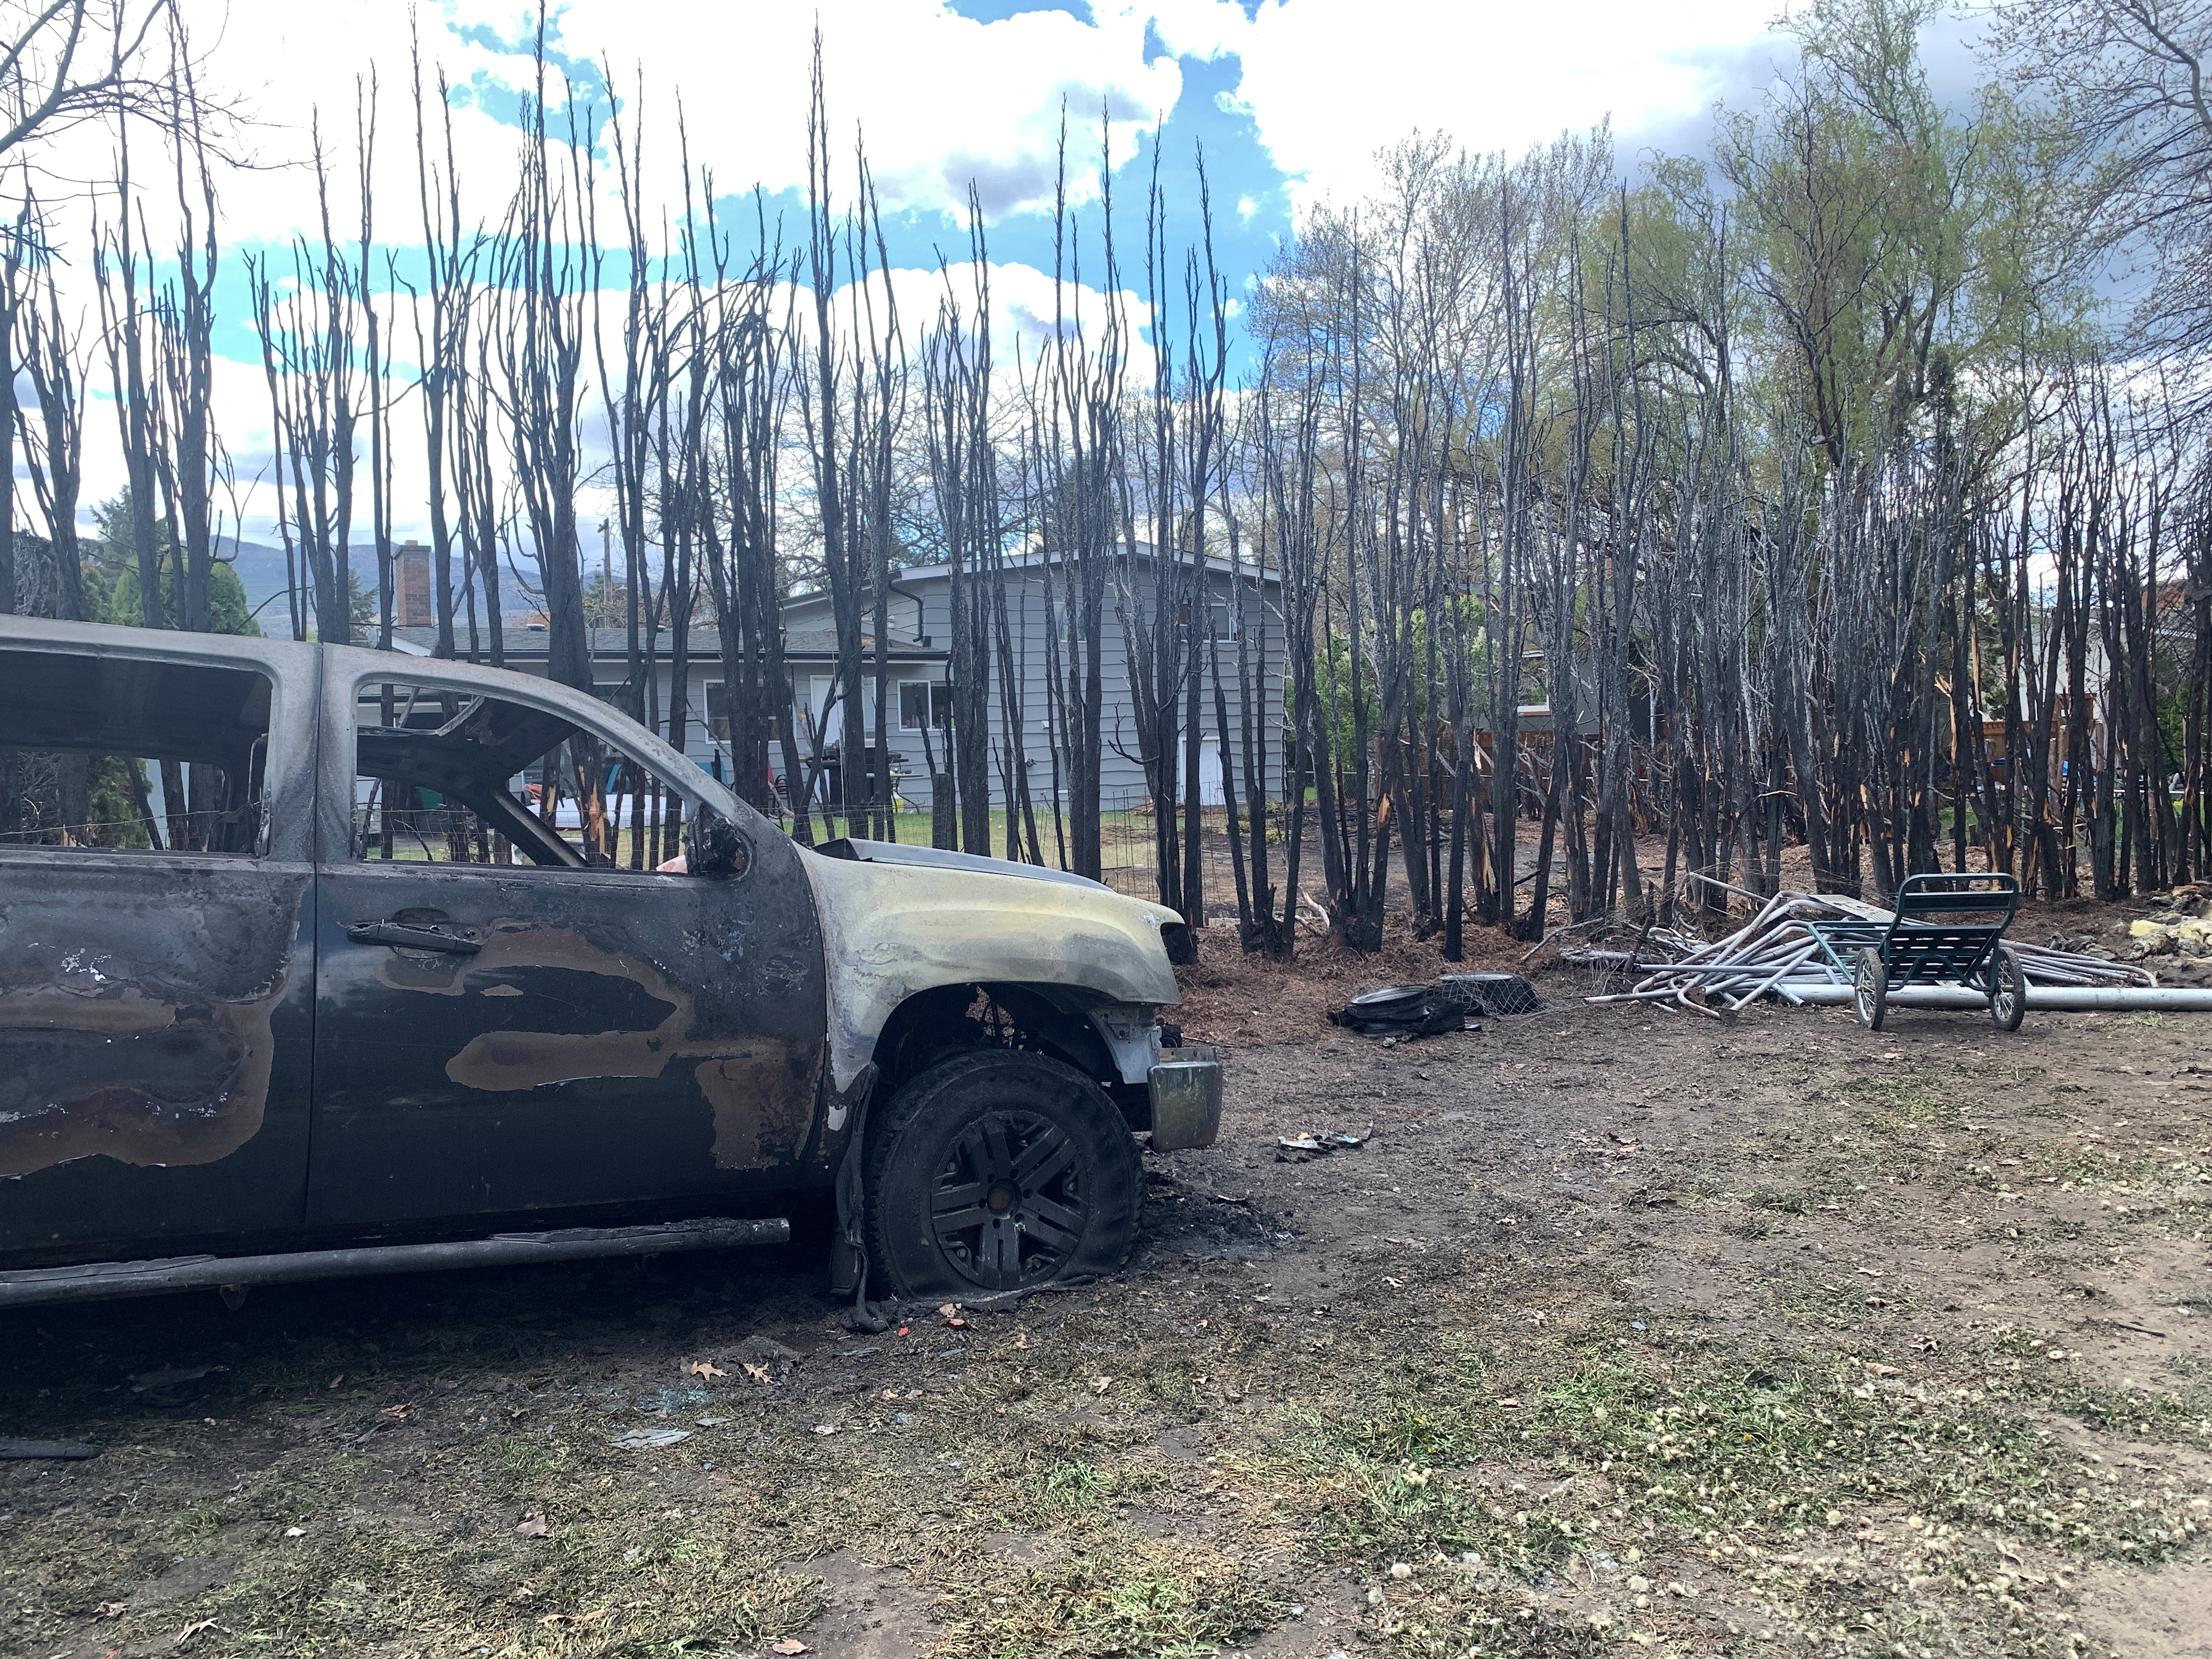 Rethink cedars, says Kelowna Fire Department after hedge blaze